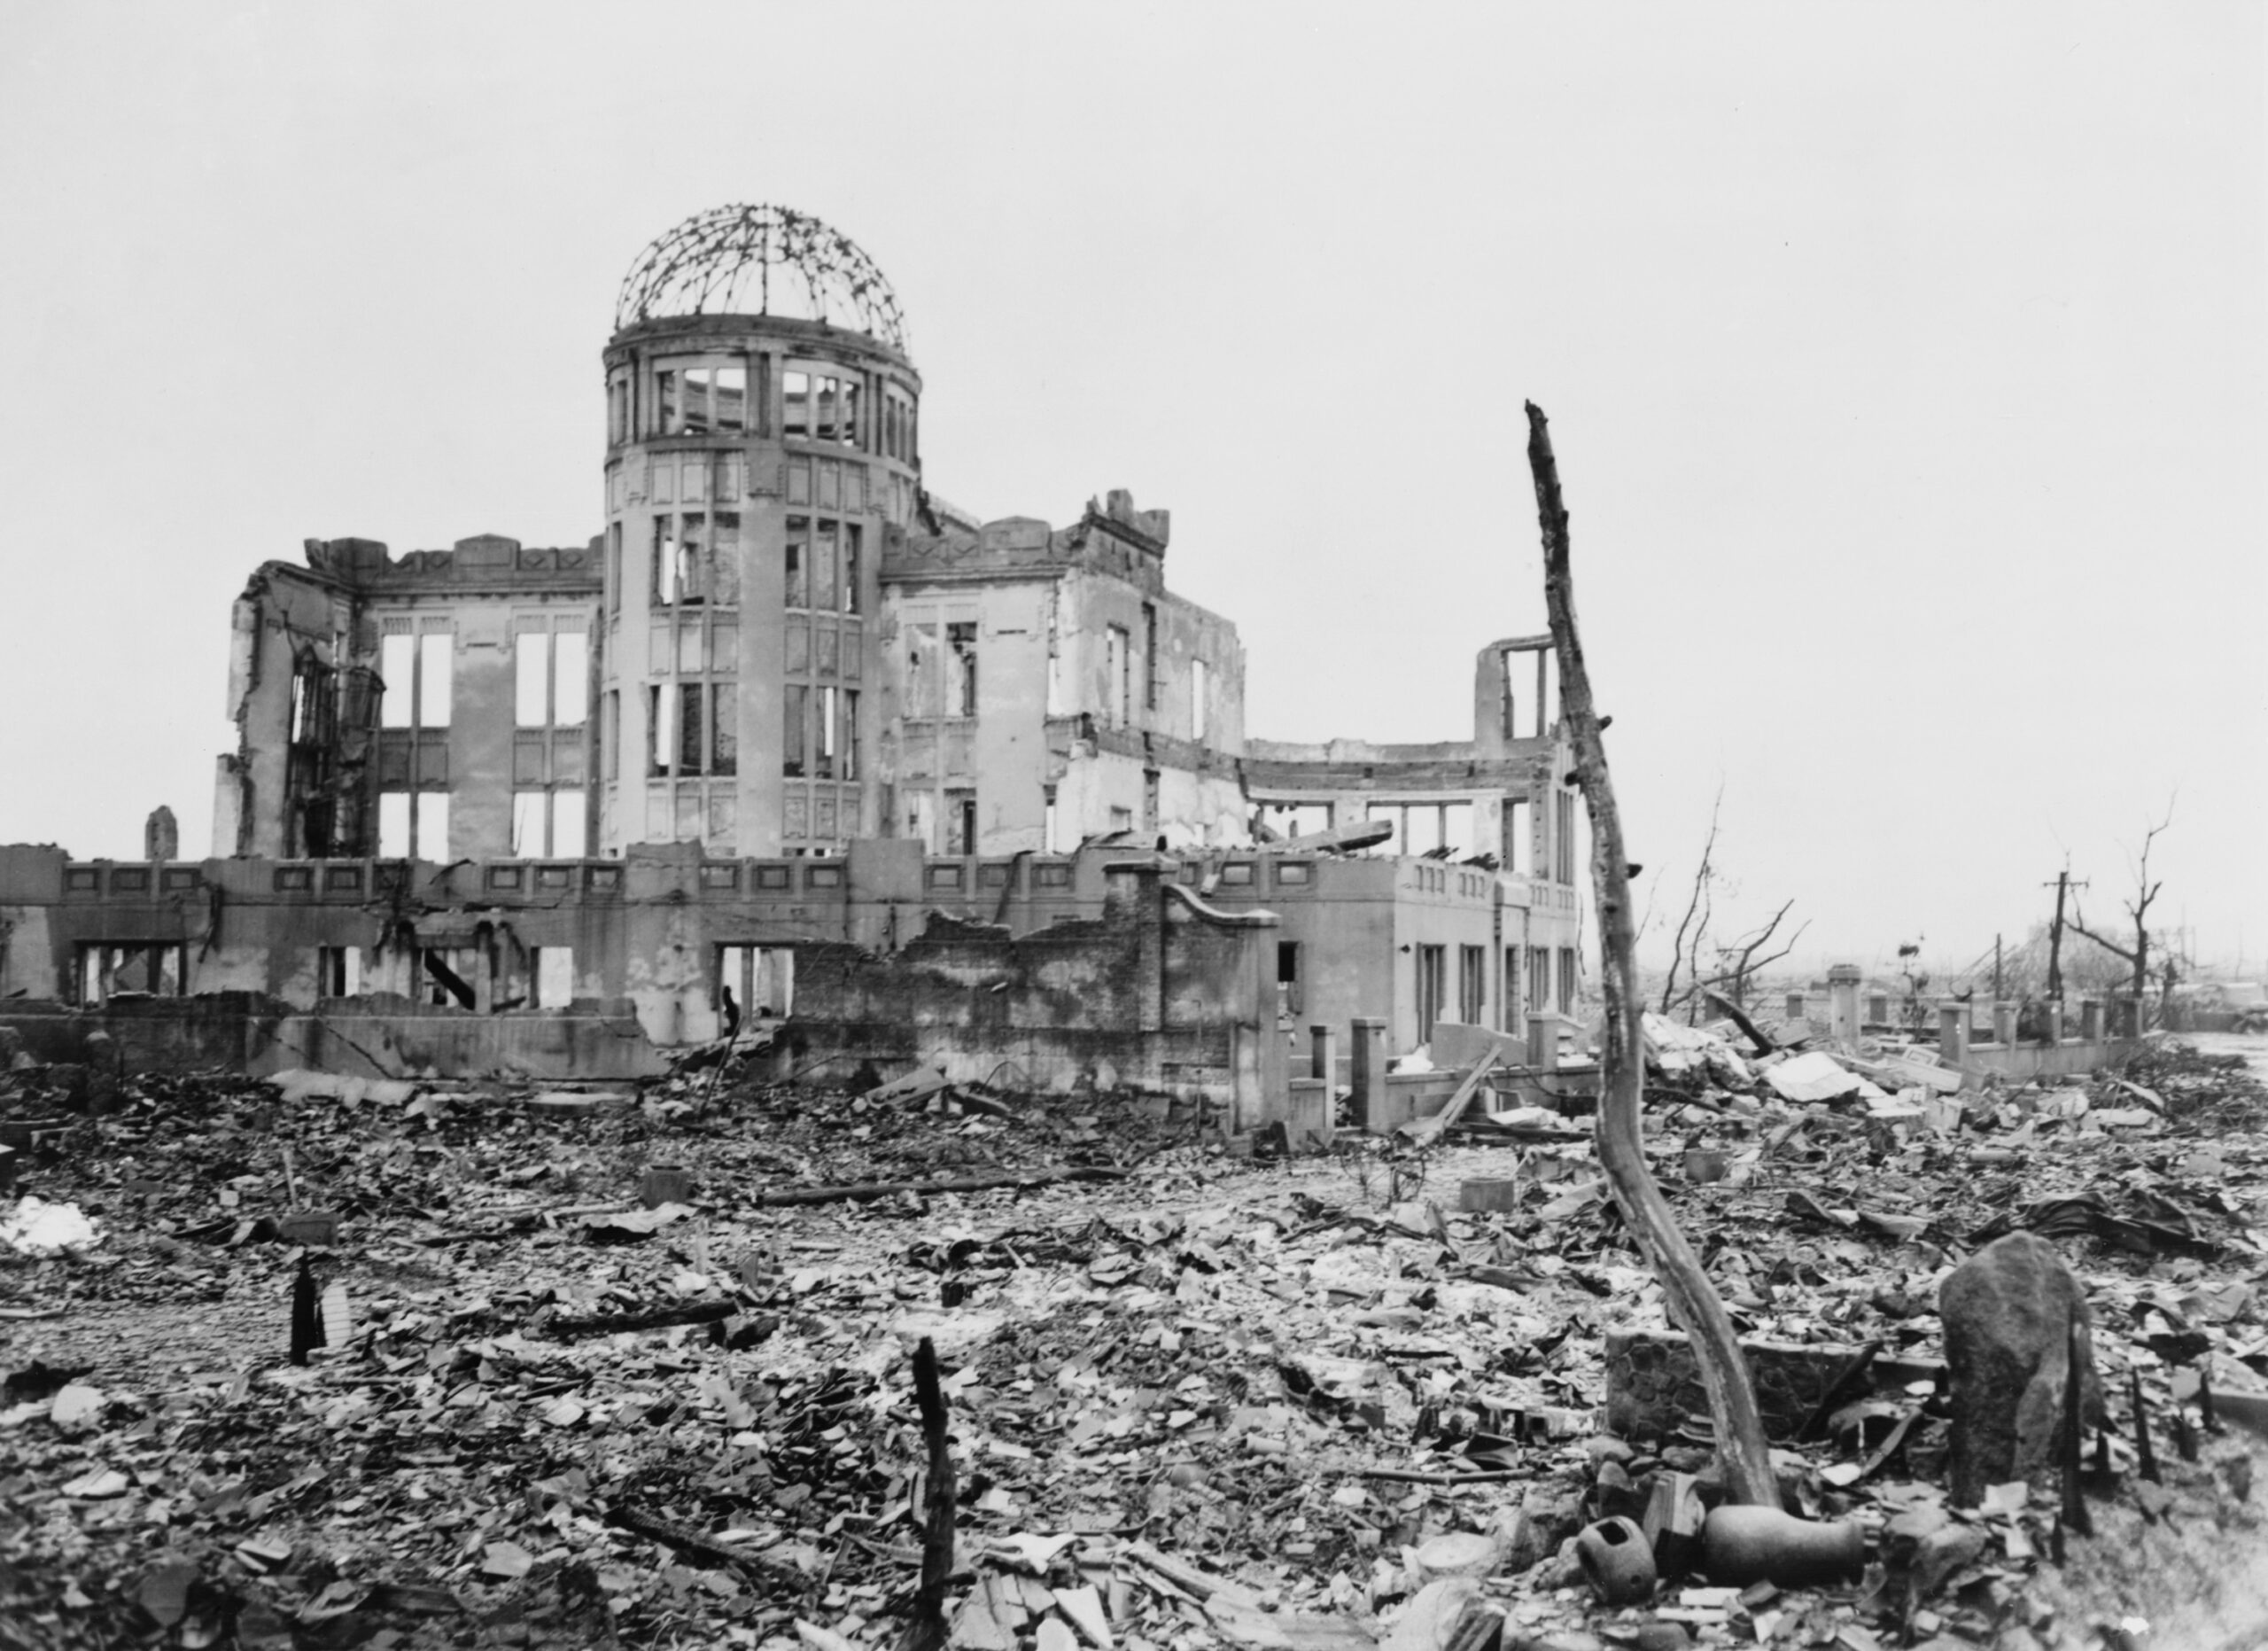 Heed the call of Hiroshima and Nagasaki